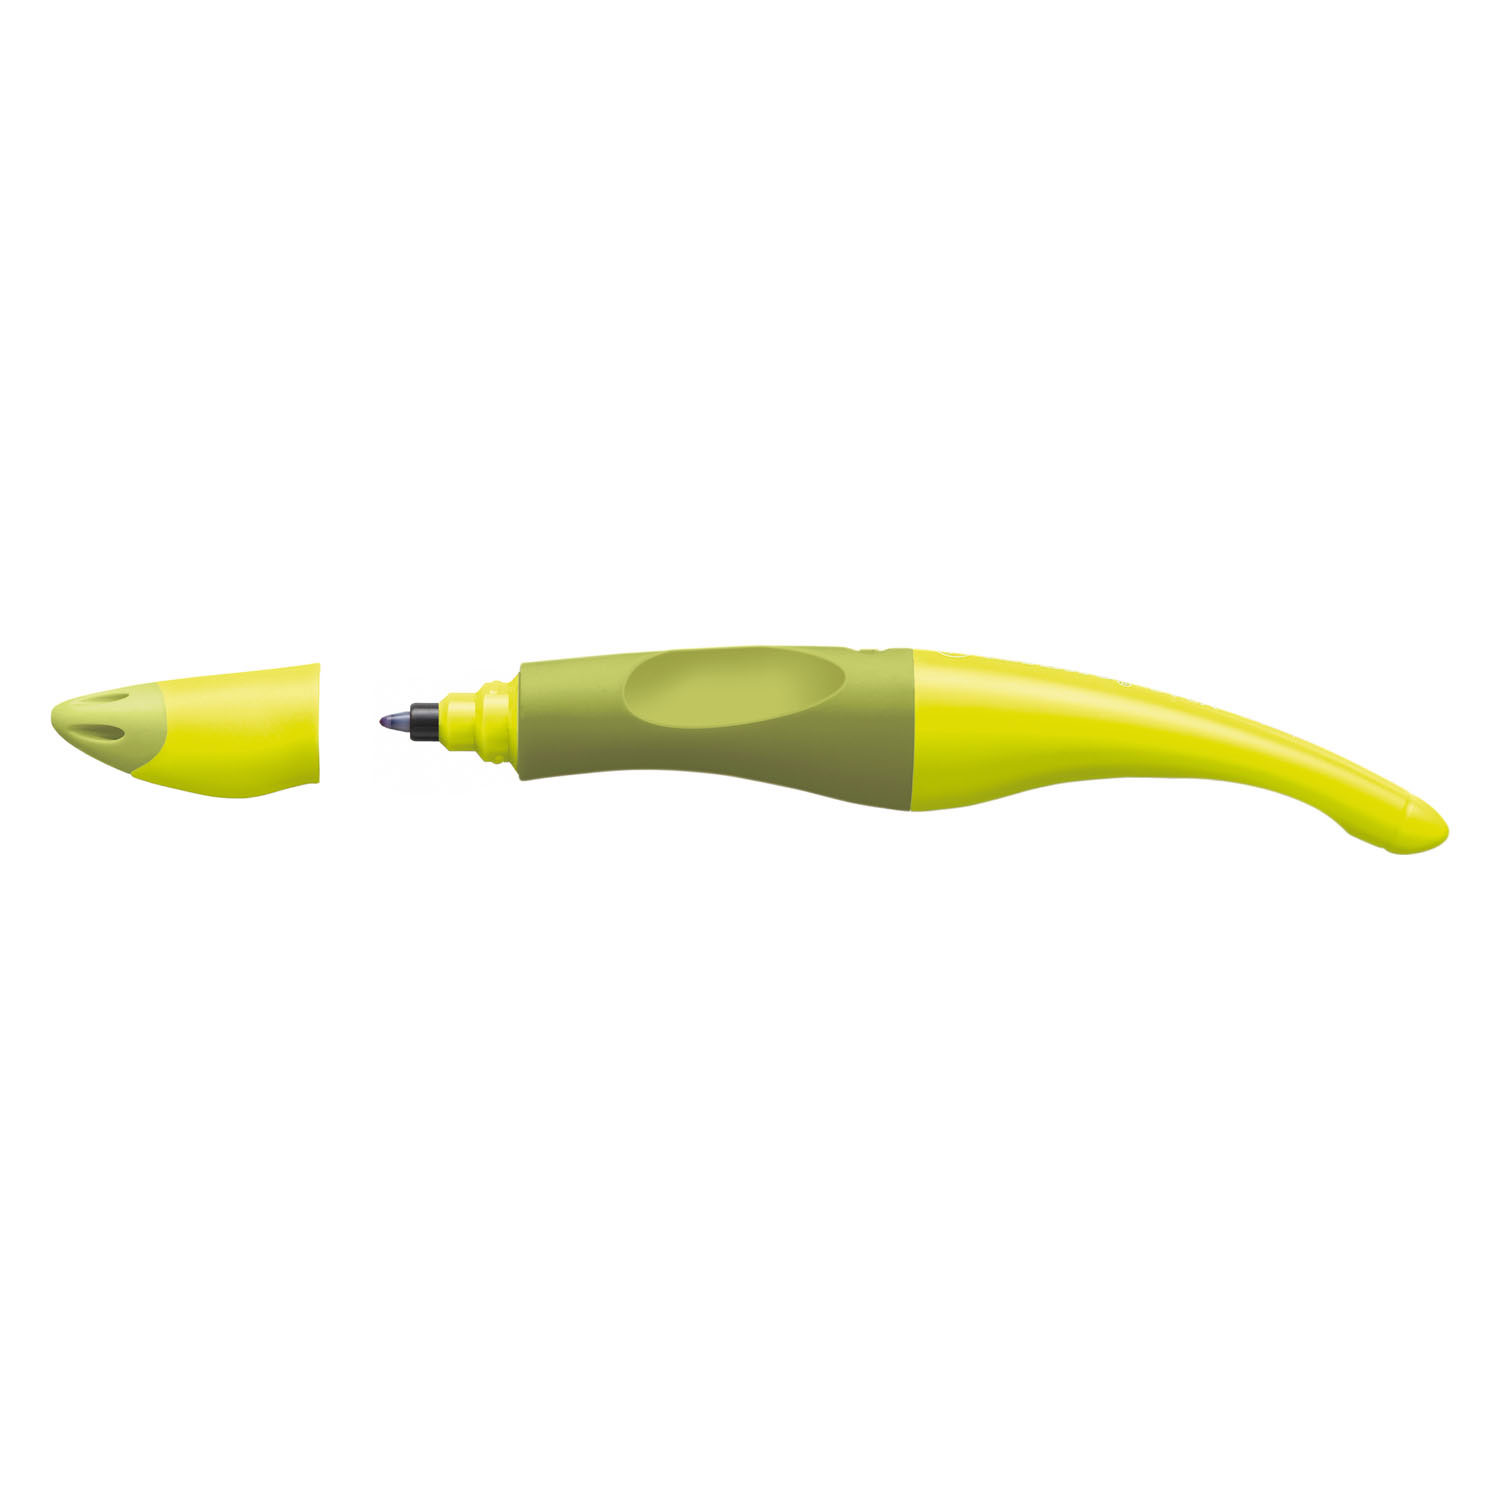 STABILO EASYoriginal – Ergonomischer Tintenroller – Rechtshänder – Limette